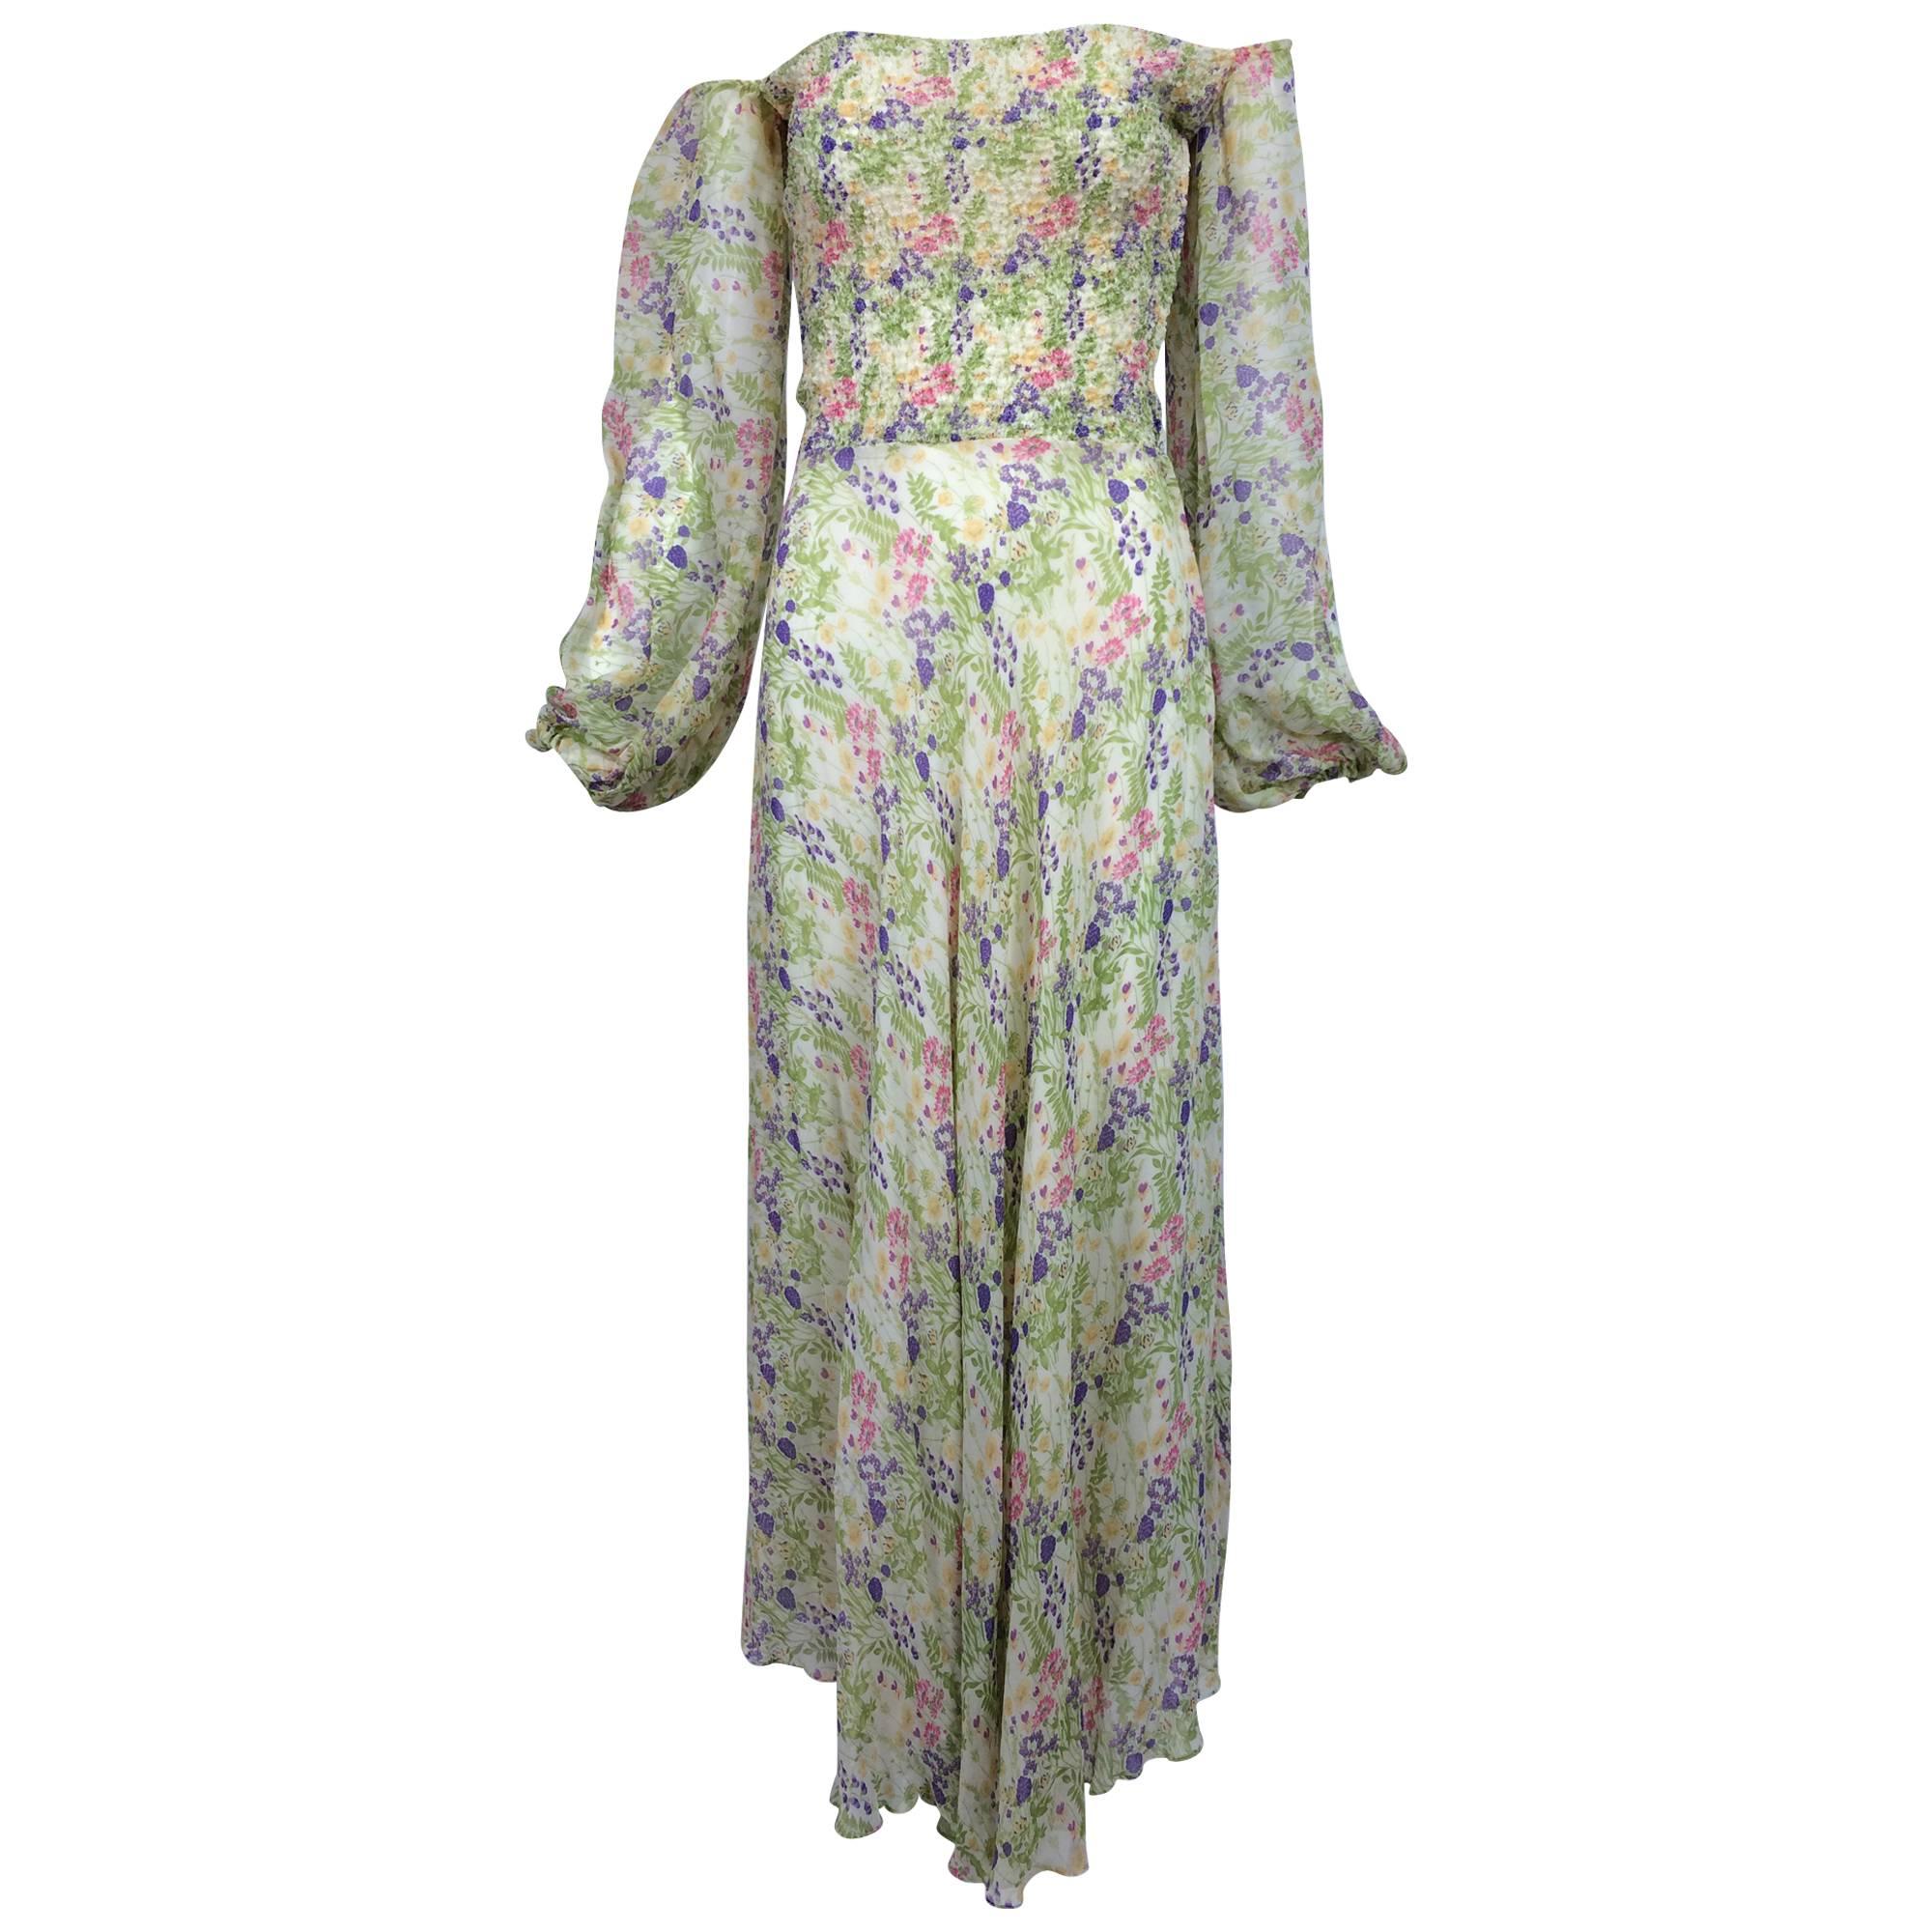 Vintage Judy Hornby London floral chiffon shirred bodice dress 1970s